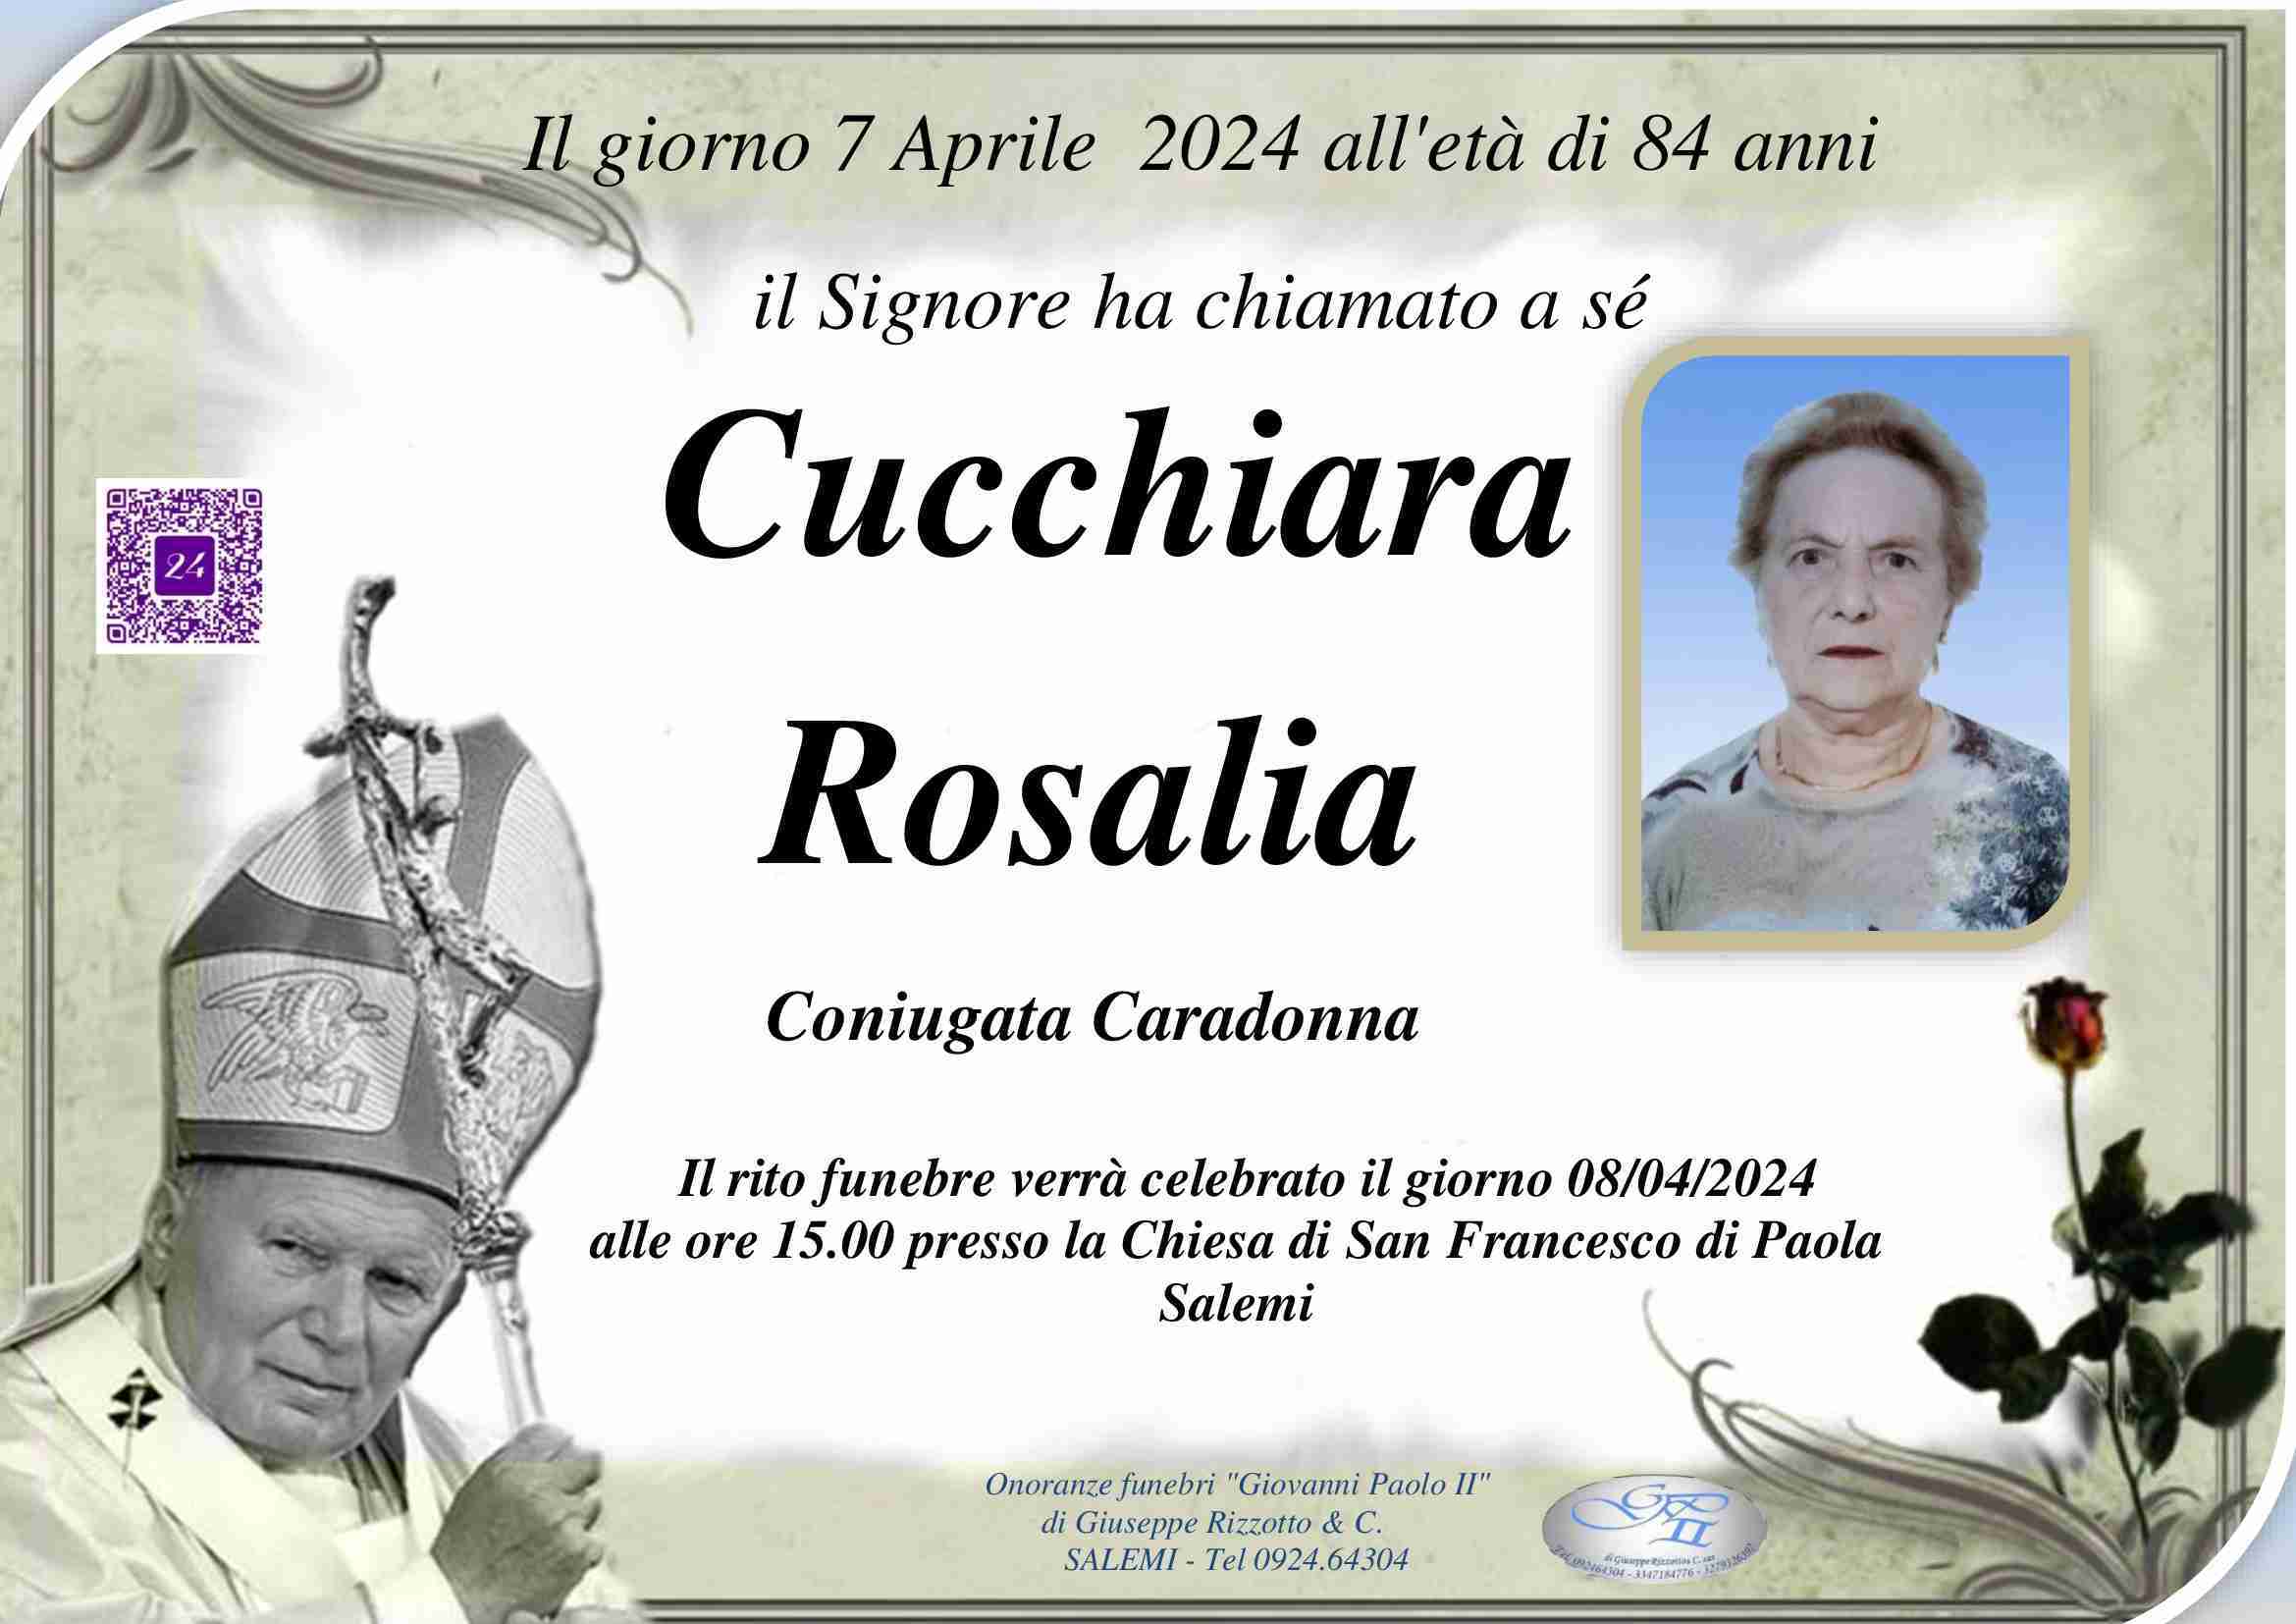 Rosalia Cucchiara